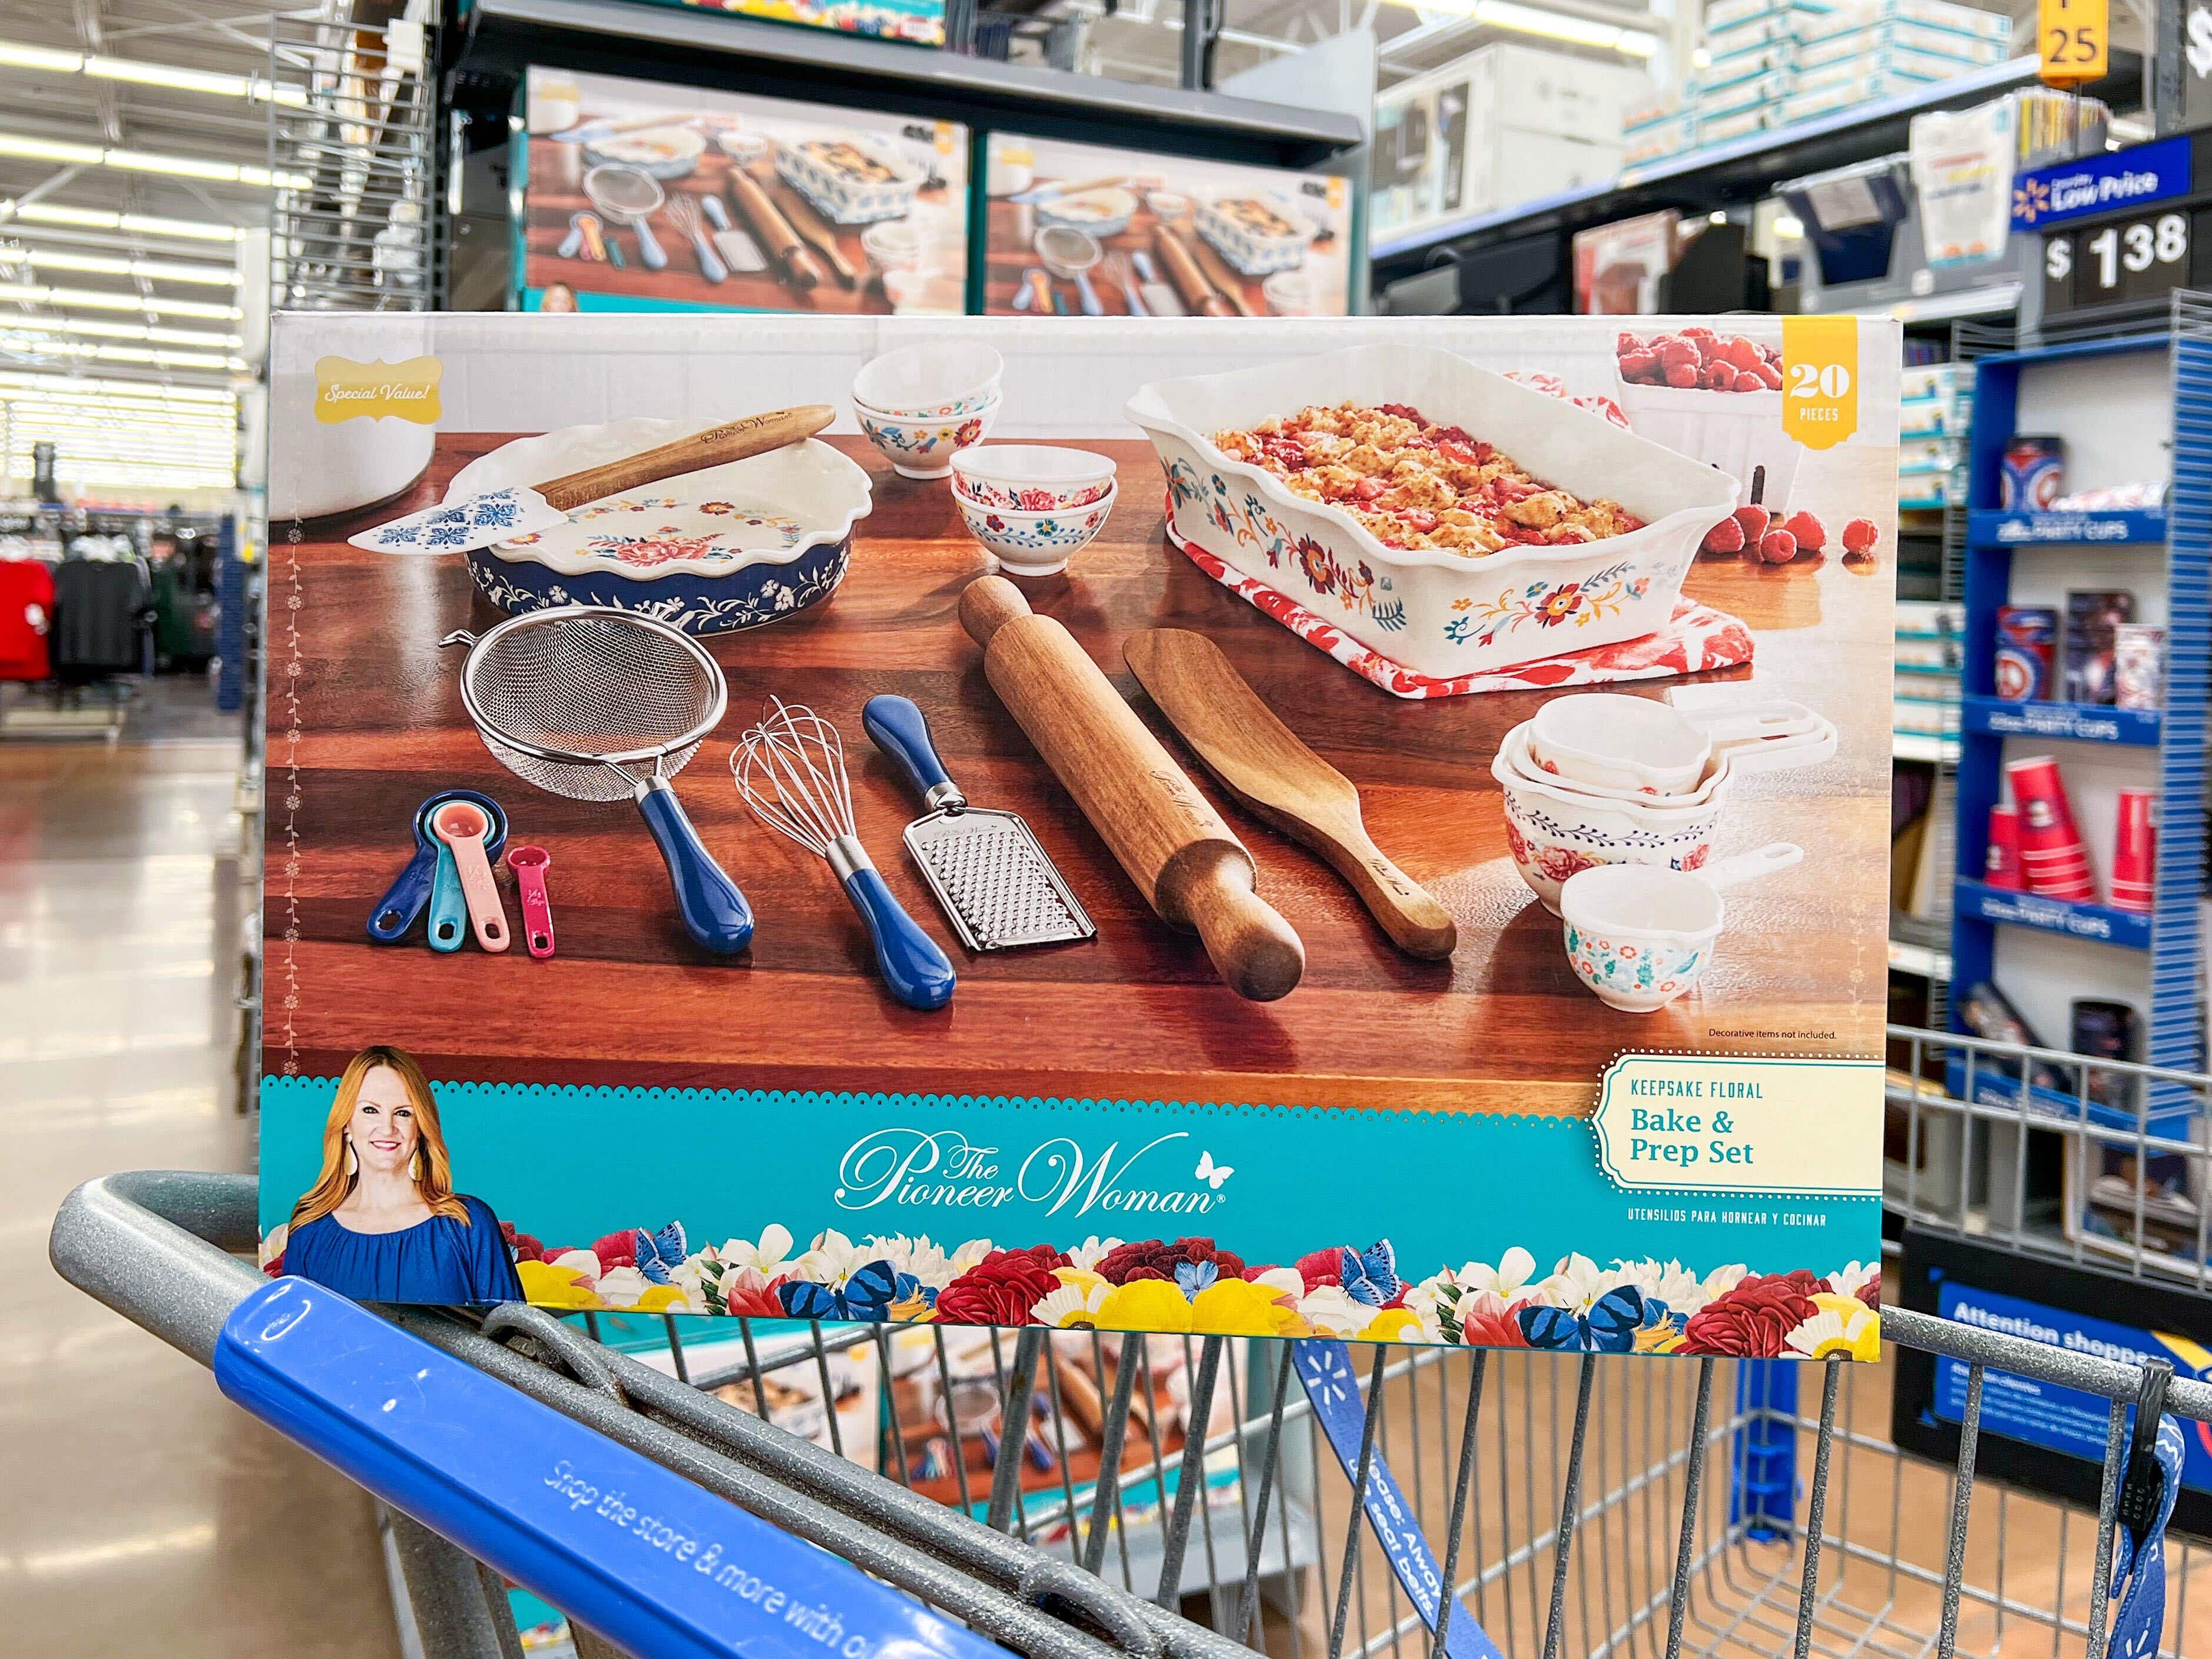 HOT* Pioneer Woman 20-Piece Bake & Prep Set ONLY $20 on Walmart